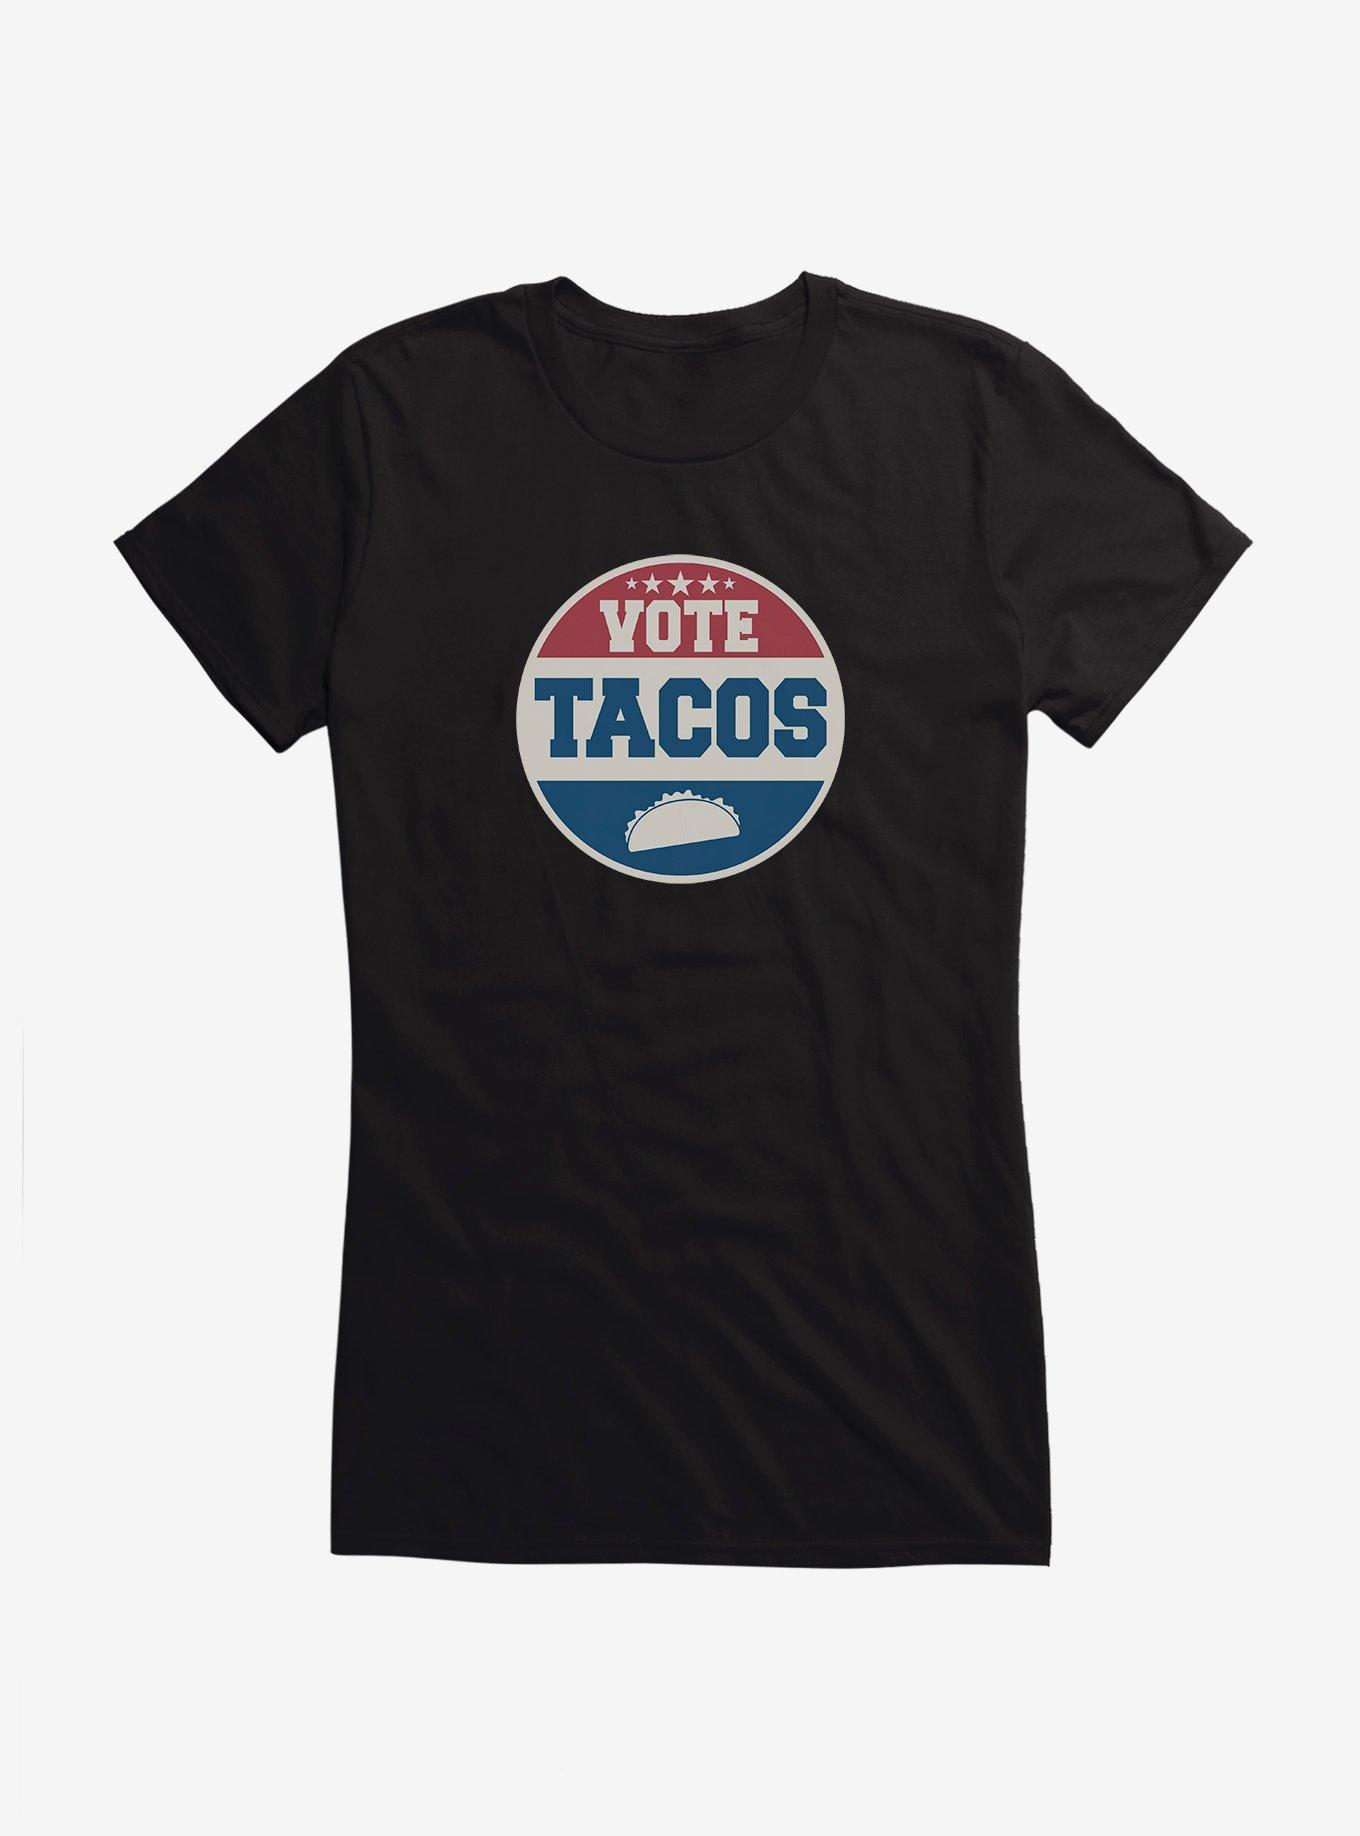 Hot Topic Voting Humor Vote Tacos Girls T-Shirt, BLACK, hi-res